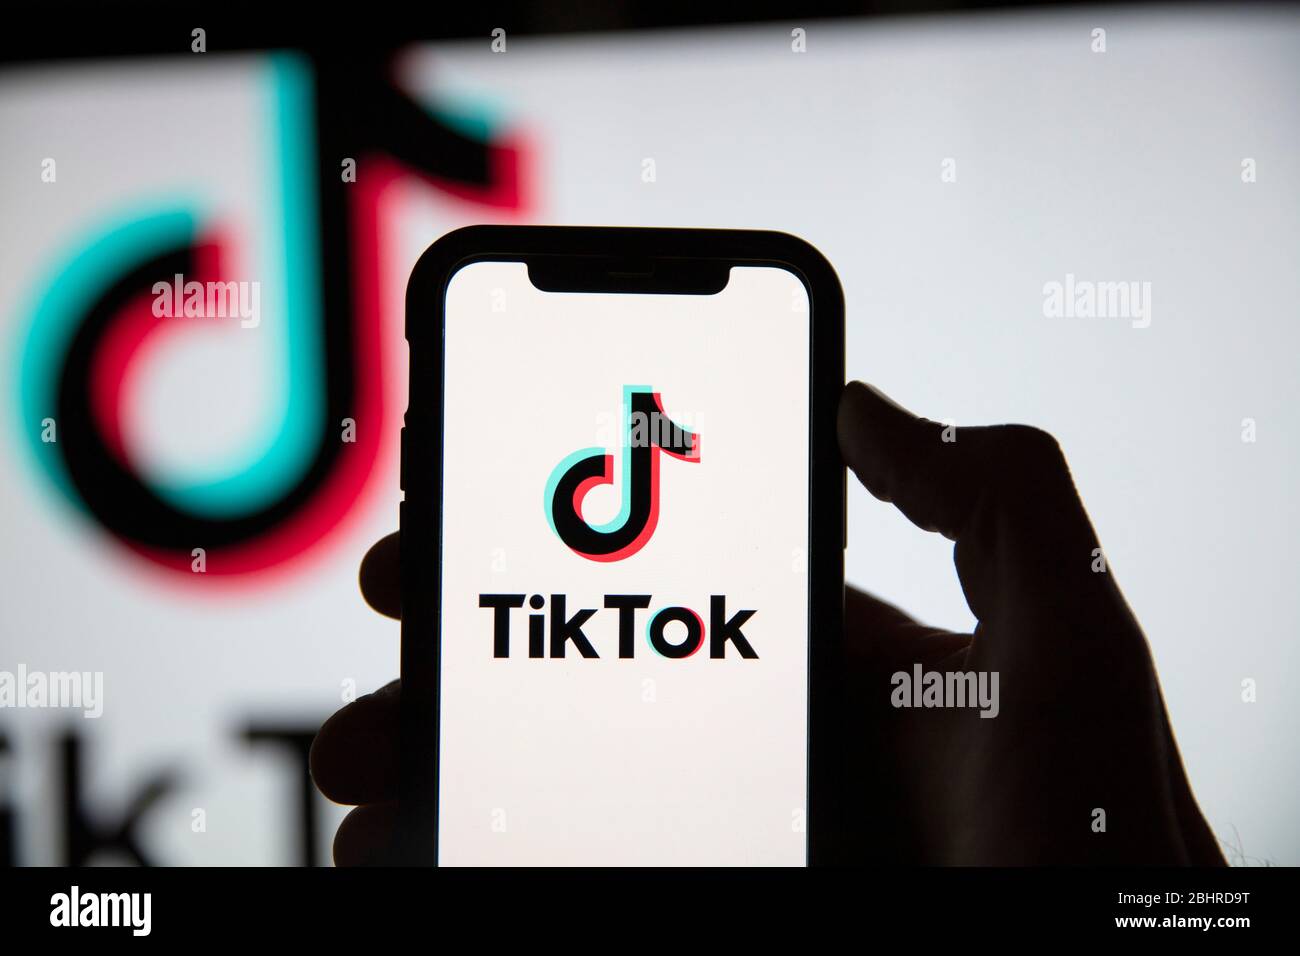 LONDON, UK - April 27 2020: Tik Tok social media app icon on a mobile device Stock Photo